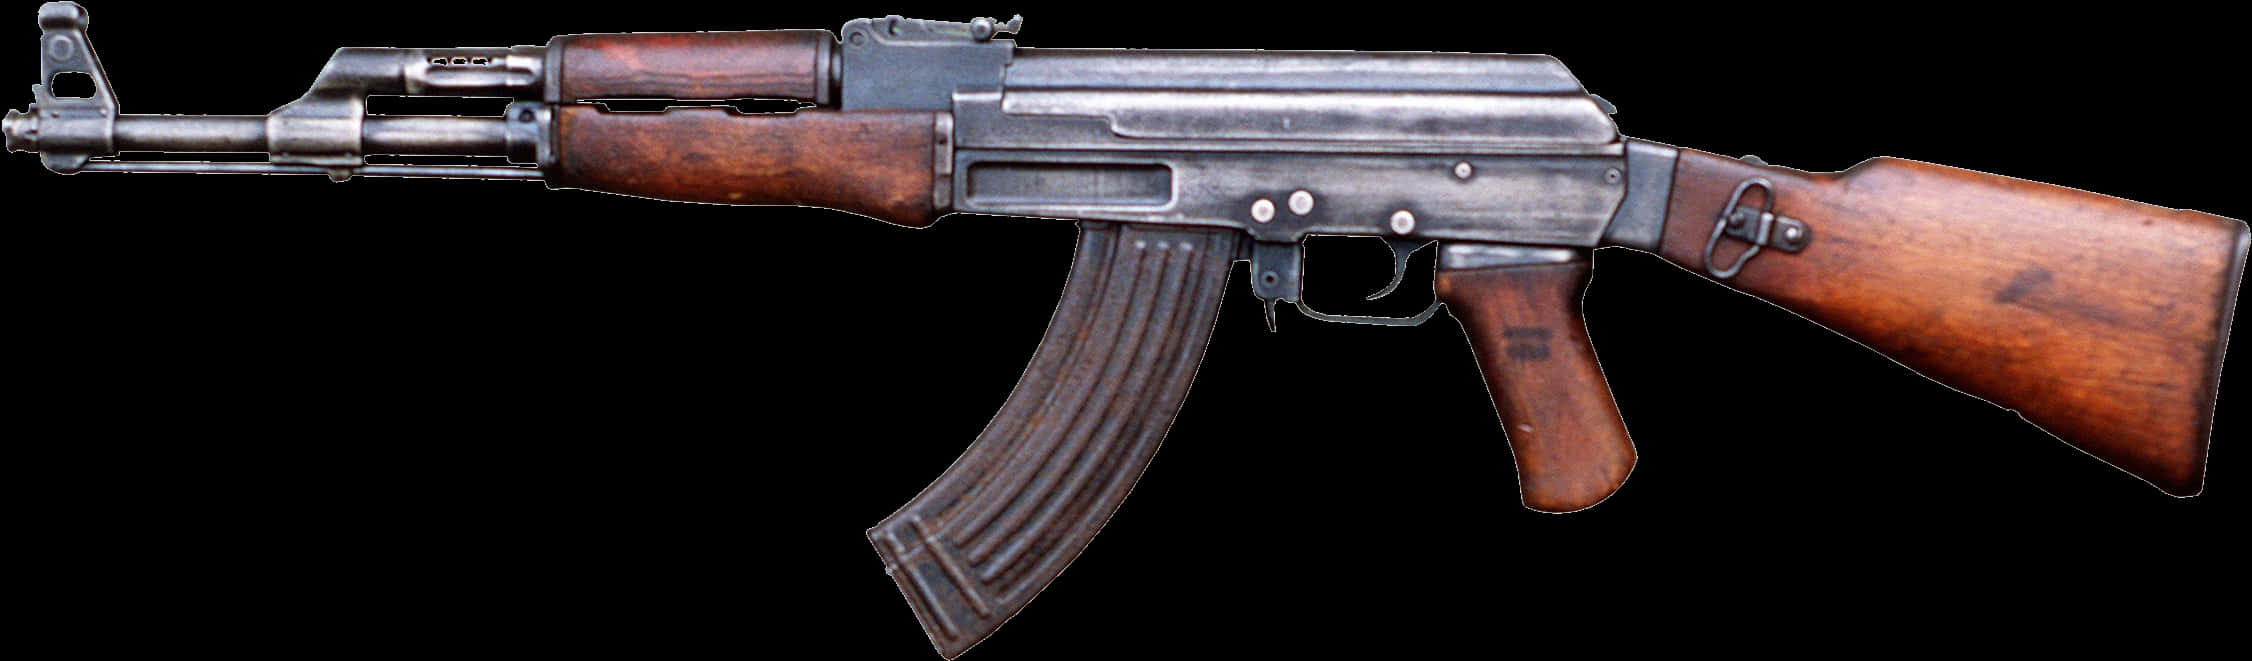 A K47 Assault Rifle Profile PNG image